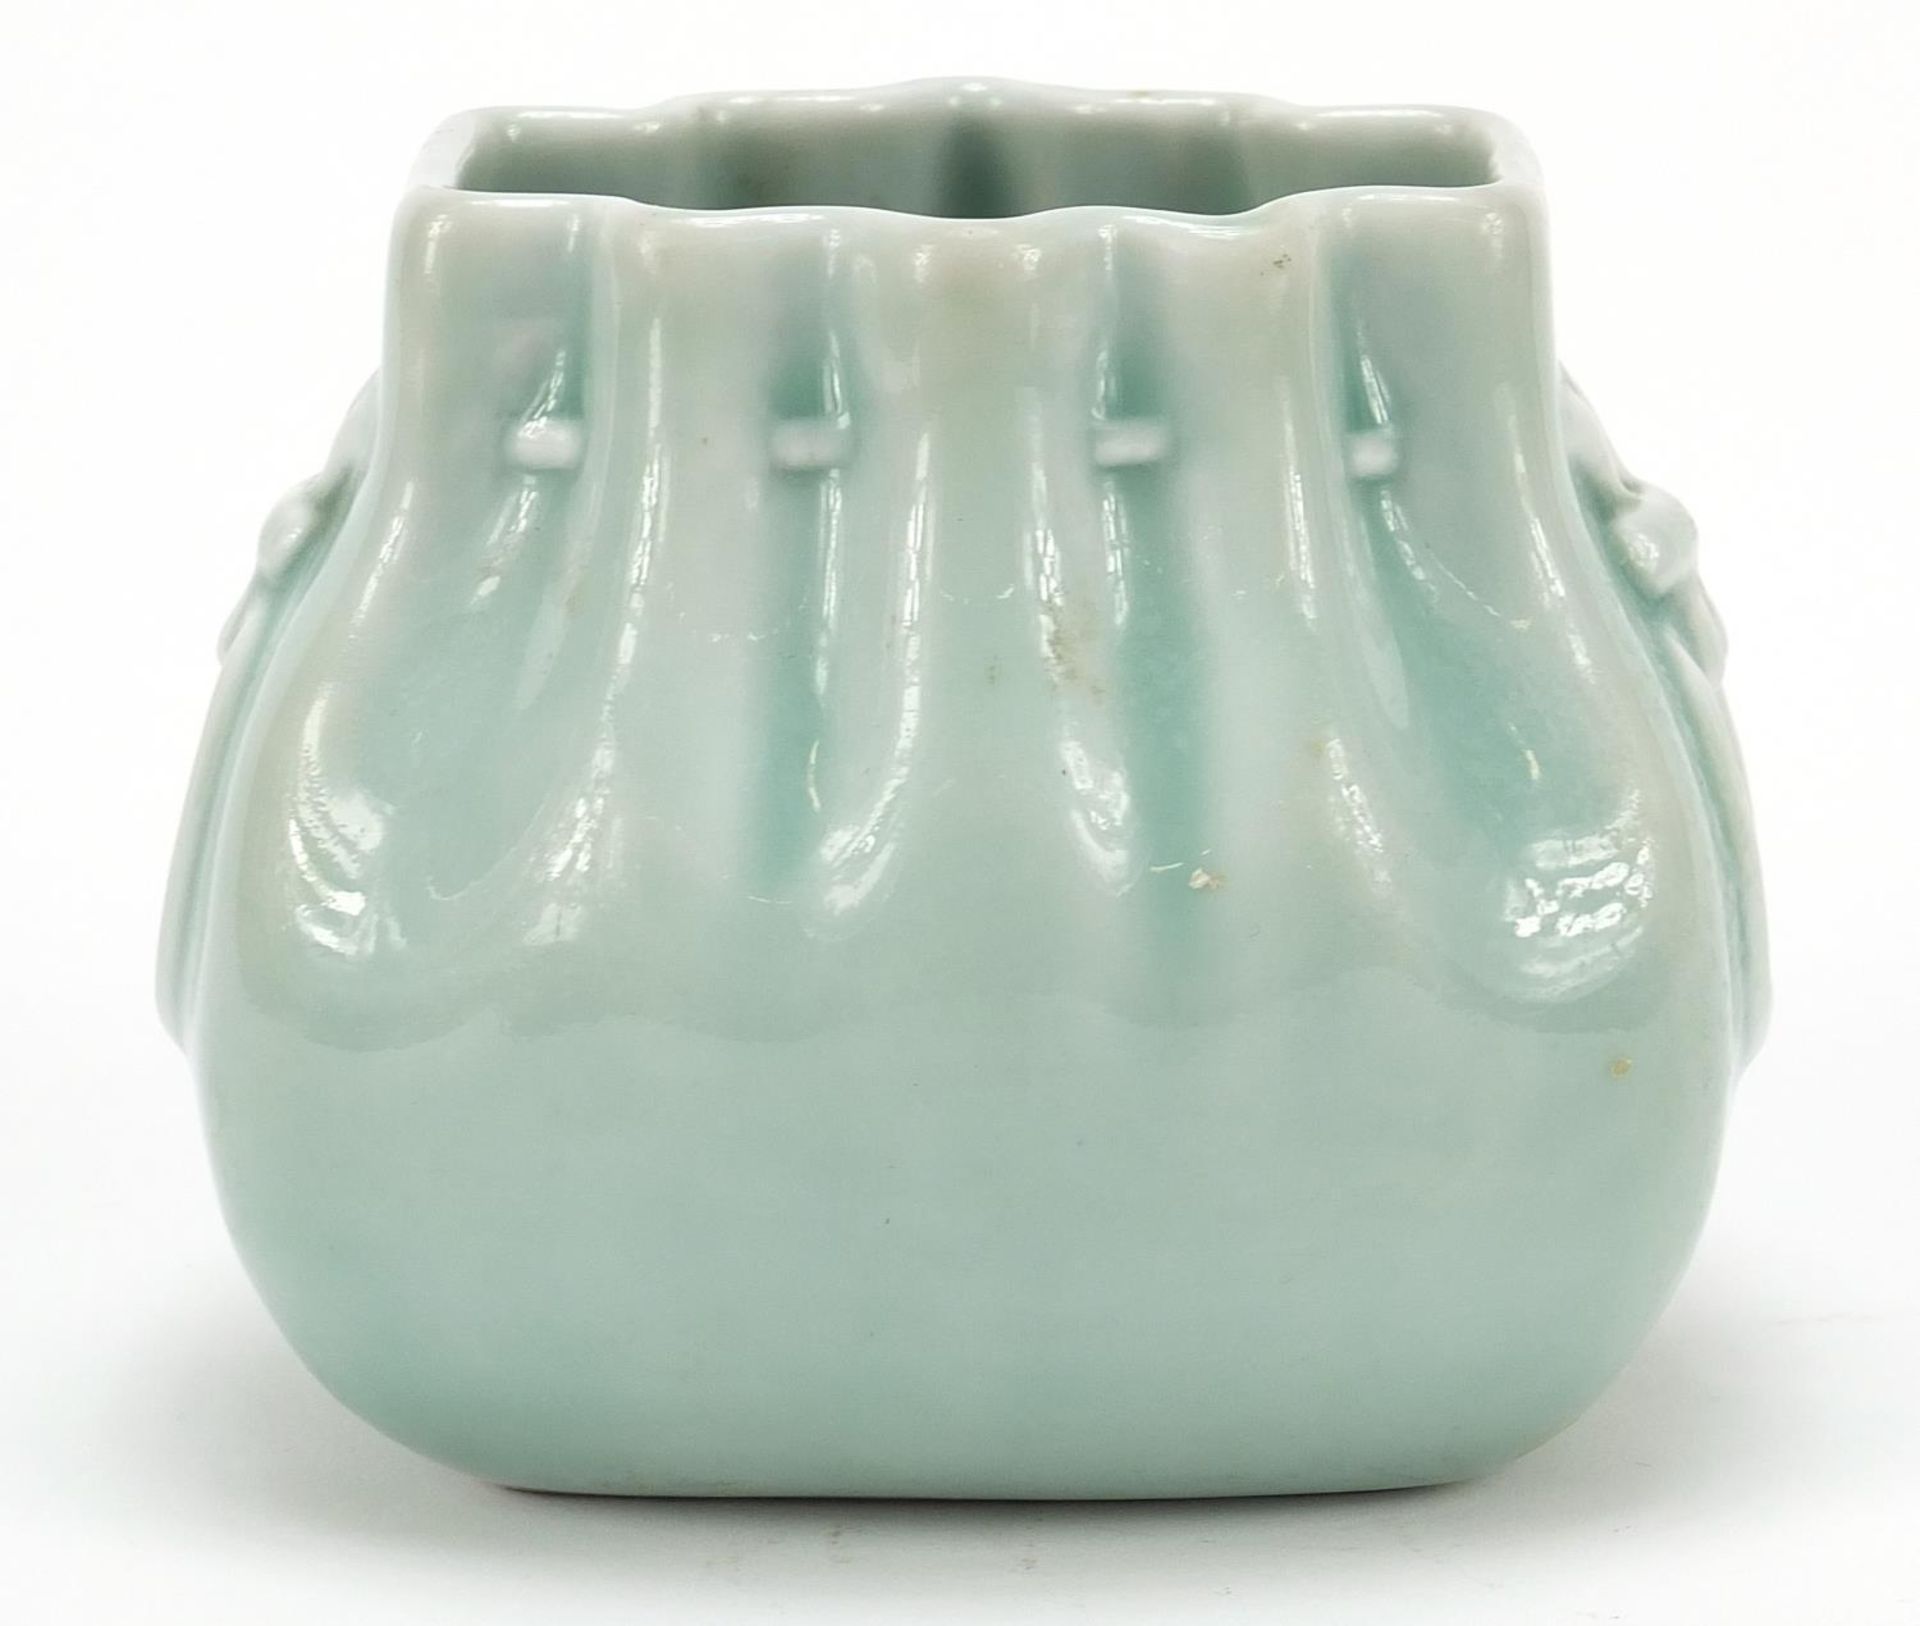 Chinese porcelain sack design vase having a celadon glaze, six figure character marks to the base,